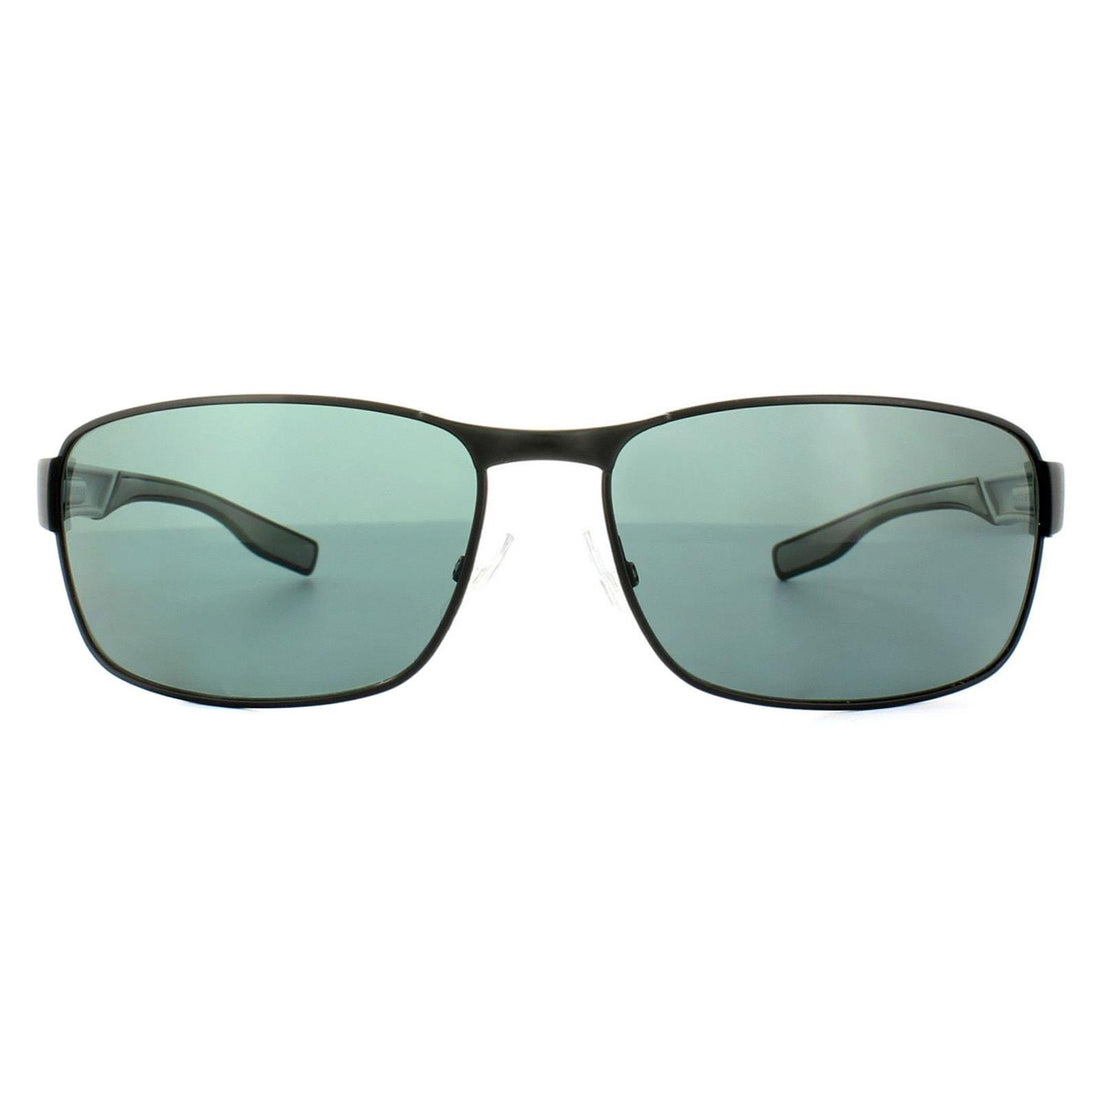 Hugo Boss 0569/P/S Sunglasses Dark Ruthenium Grey Green Polarized